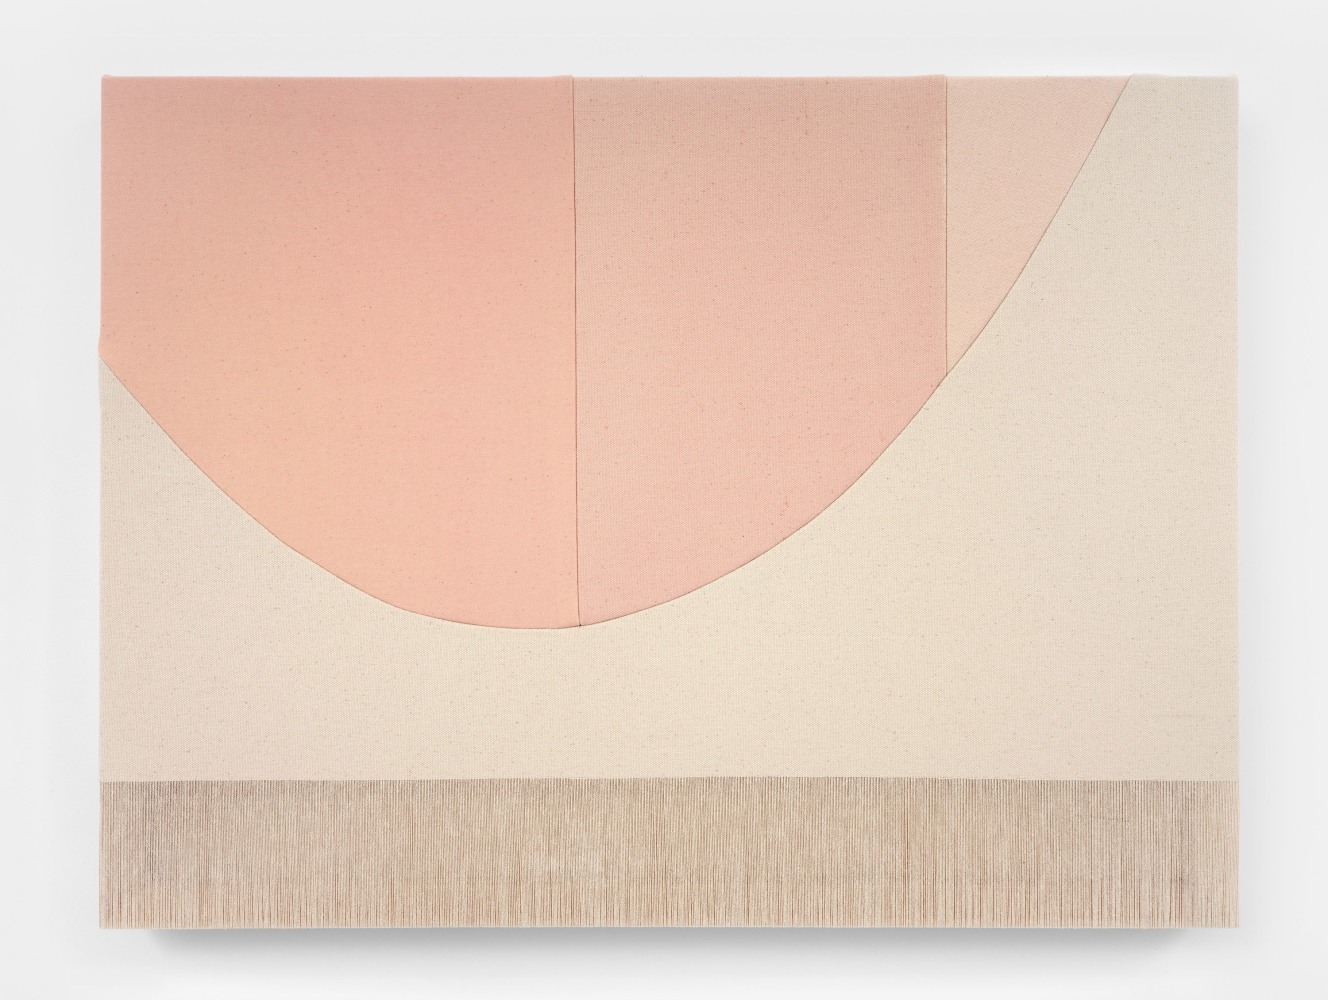 Rebecca Ward&amp;nbsp;
half circle (pink), 2022&amp;nbsp;
acrylic and dye on stitched canvas
18 x 24 inches (45.7 x 61 cm)&amp;nbsp;
(RWA22-15)&amp;nbsp;